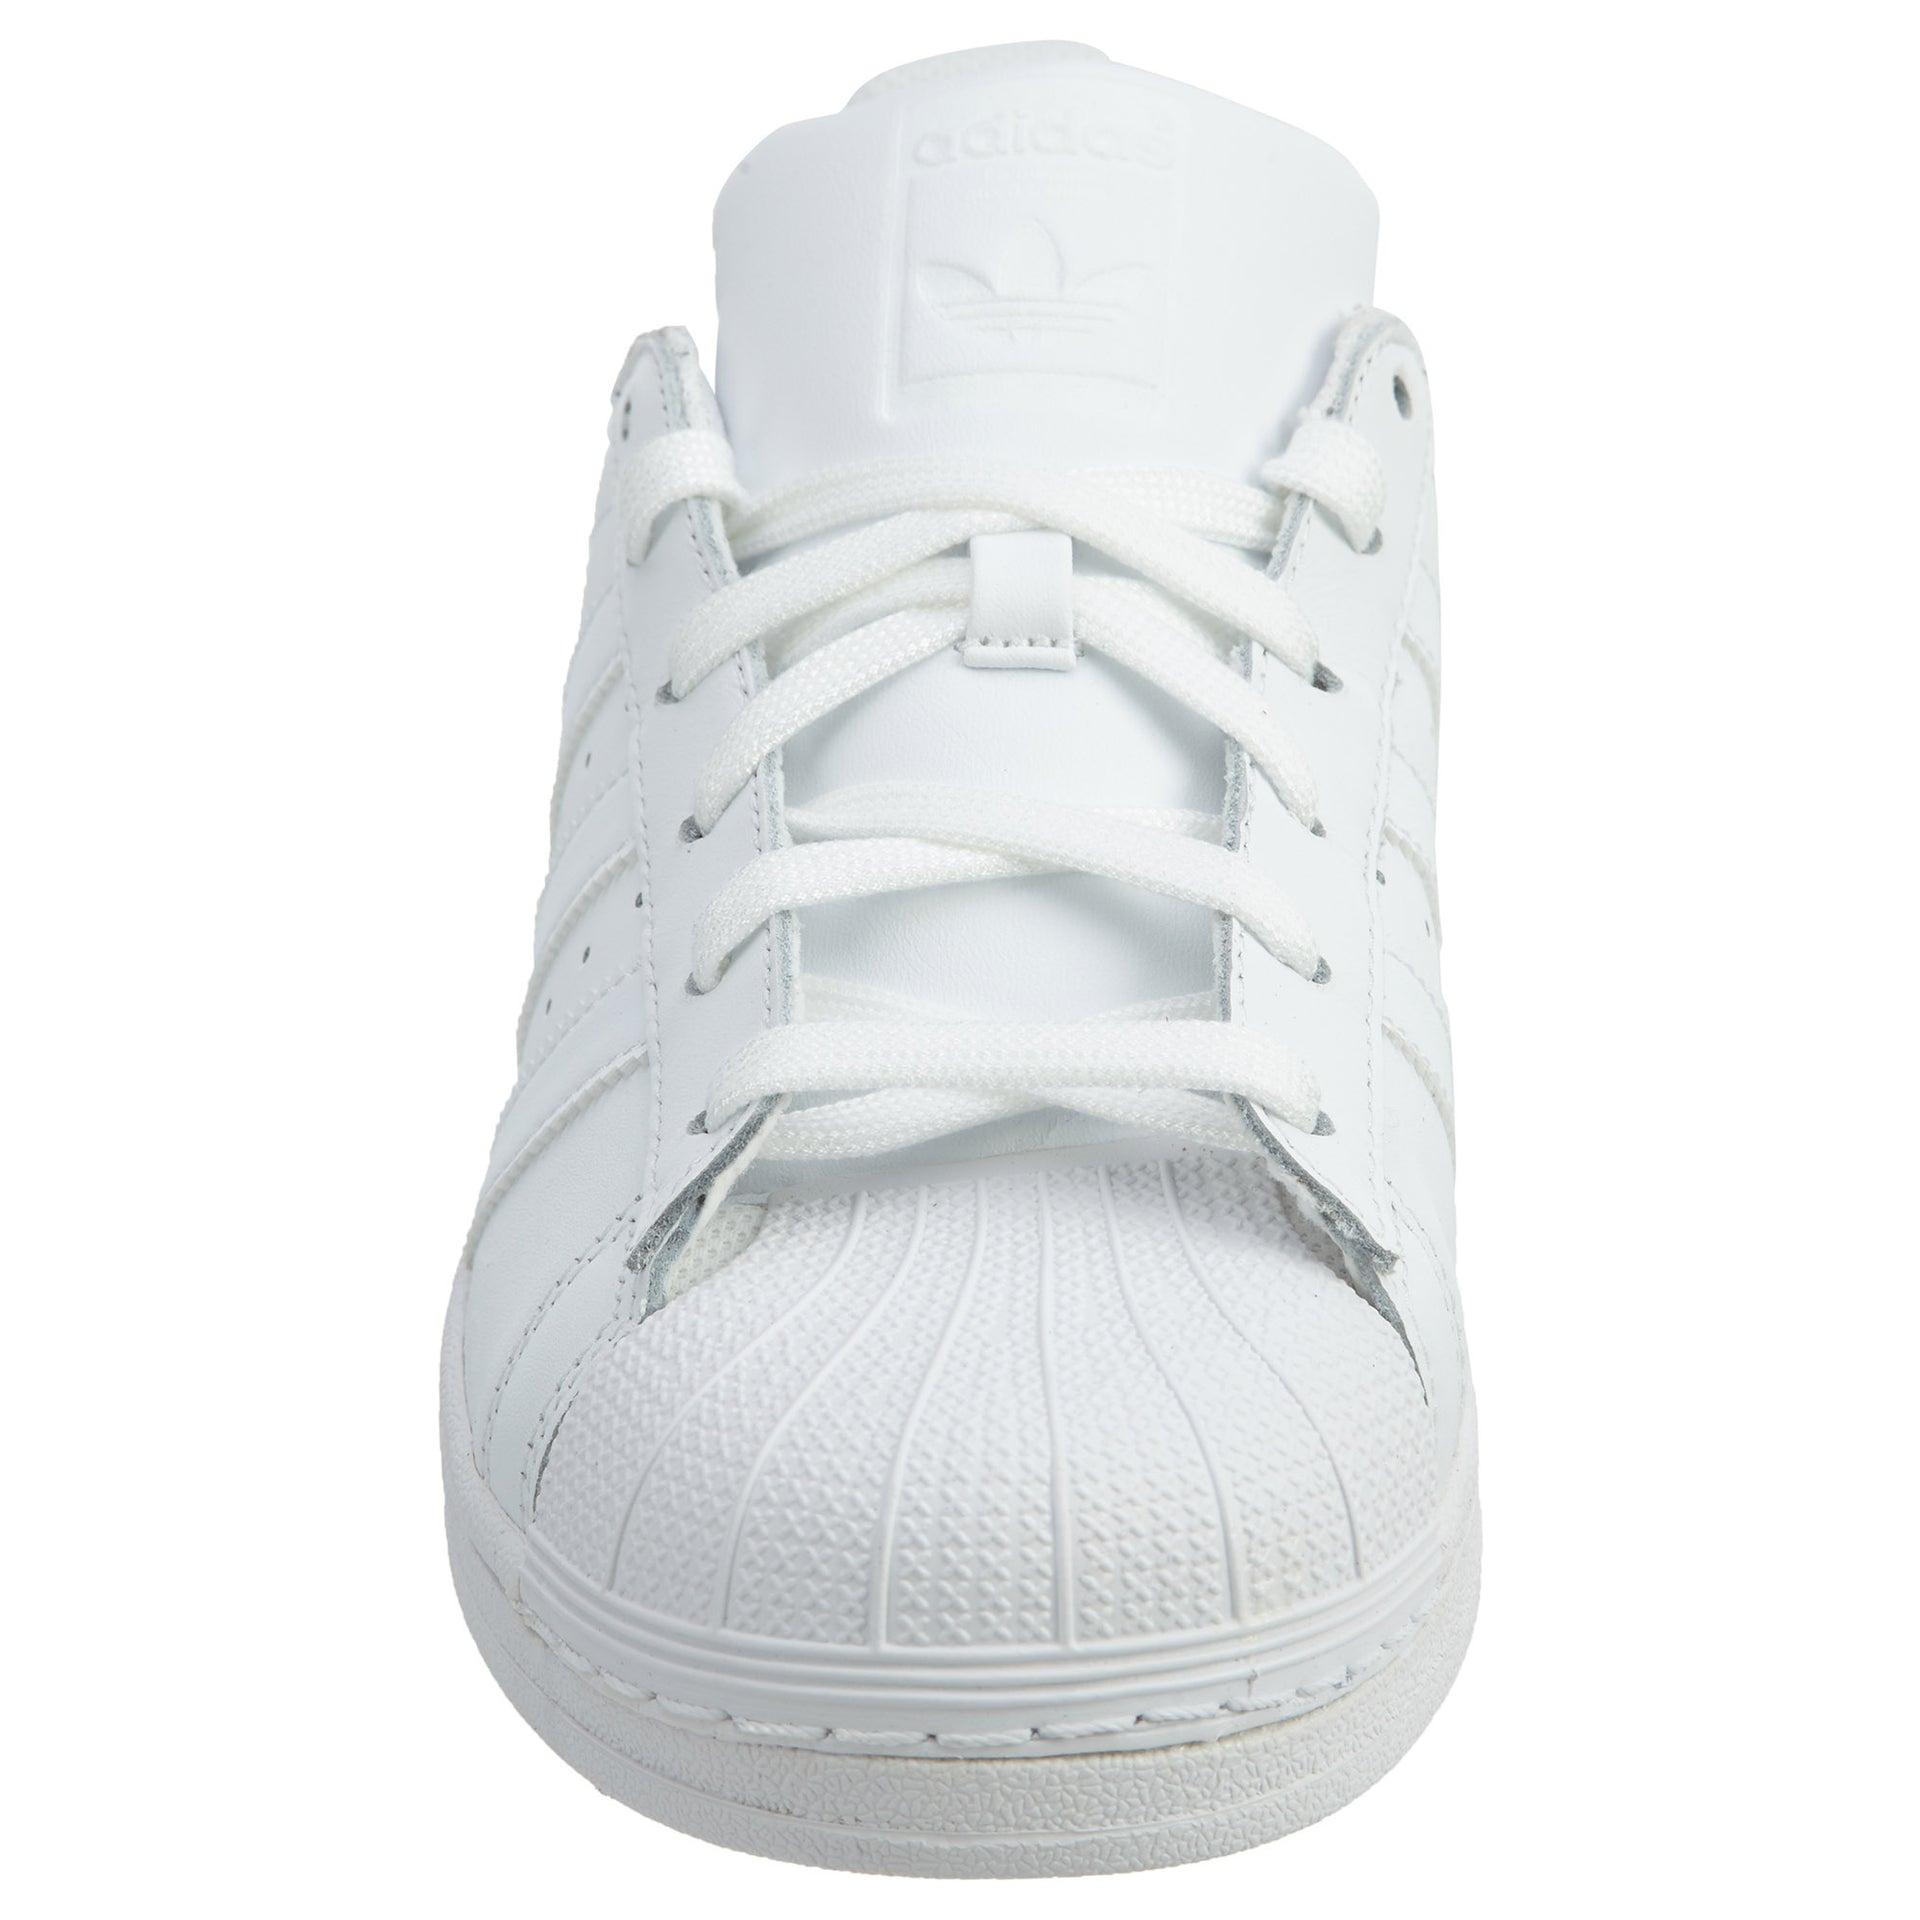 adidas Superstar Foundation White/White